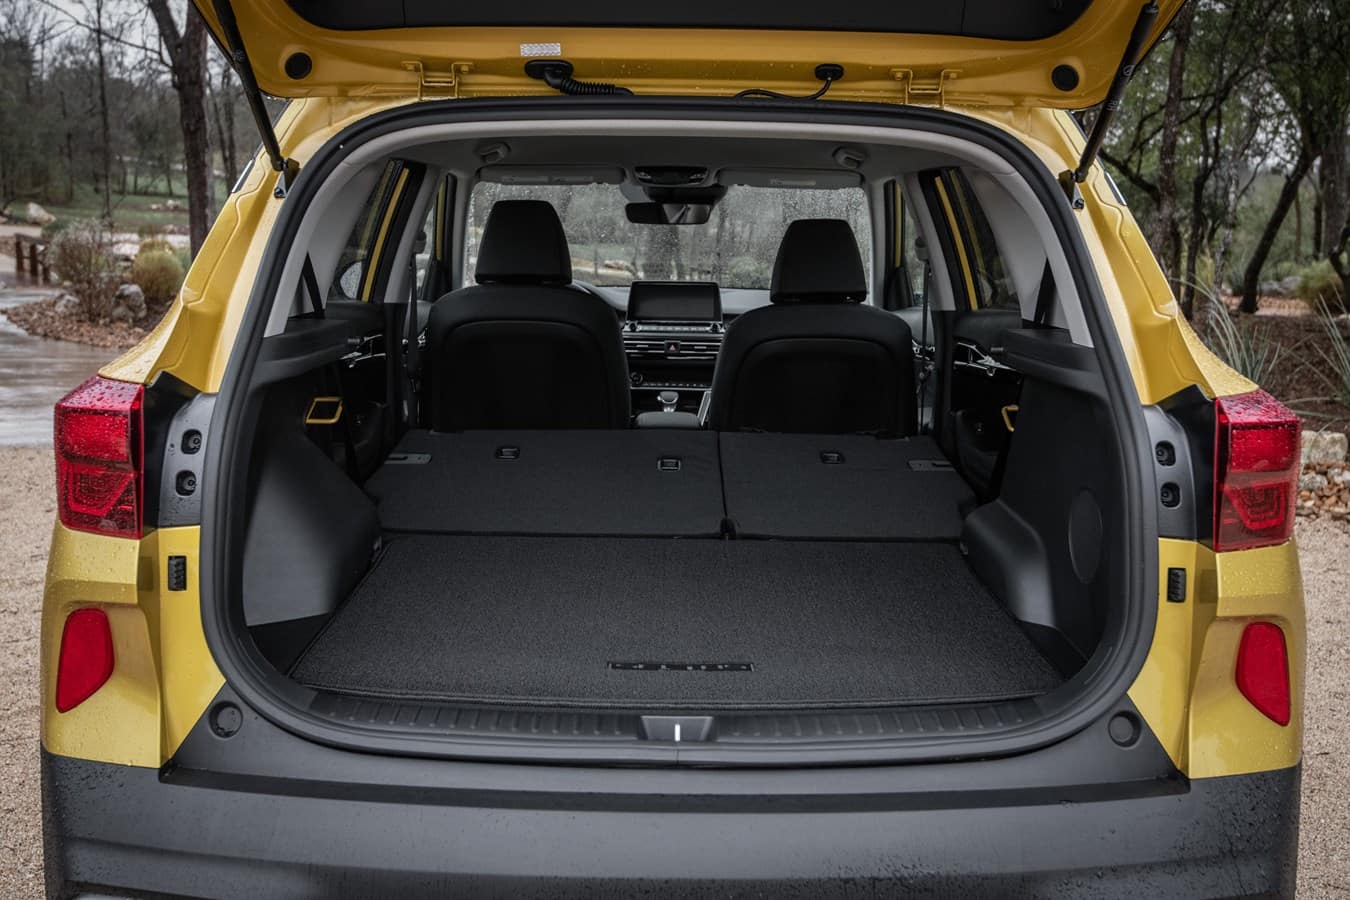 New Kia Seltos - Urban Crossover - Affordable Compact SUV